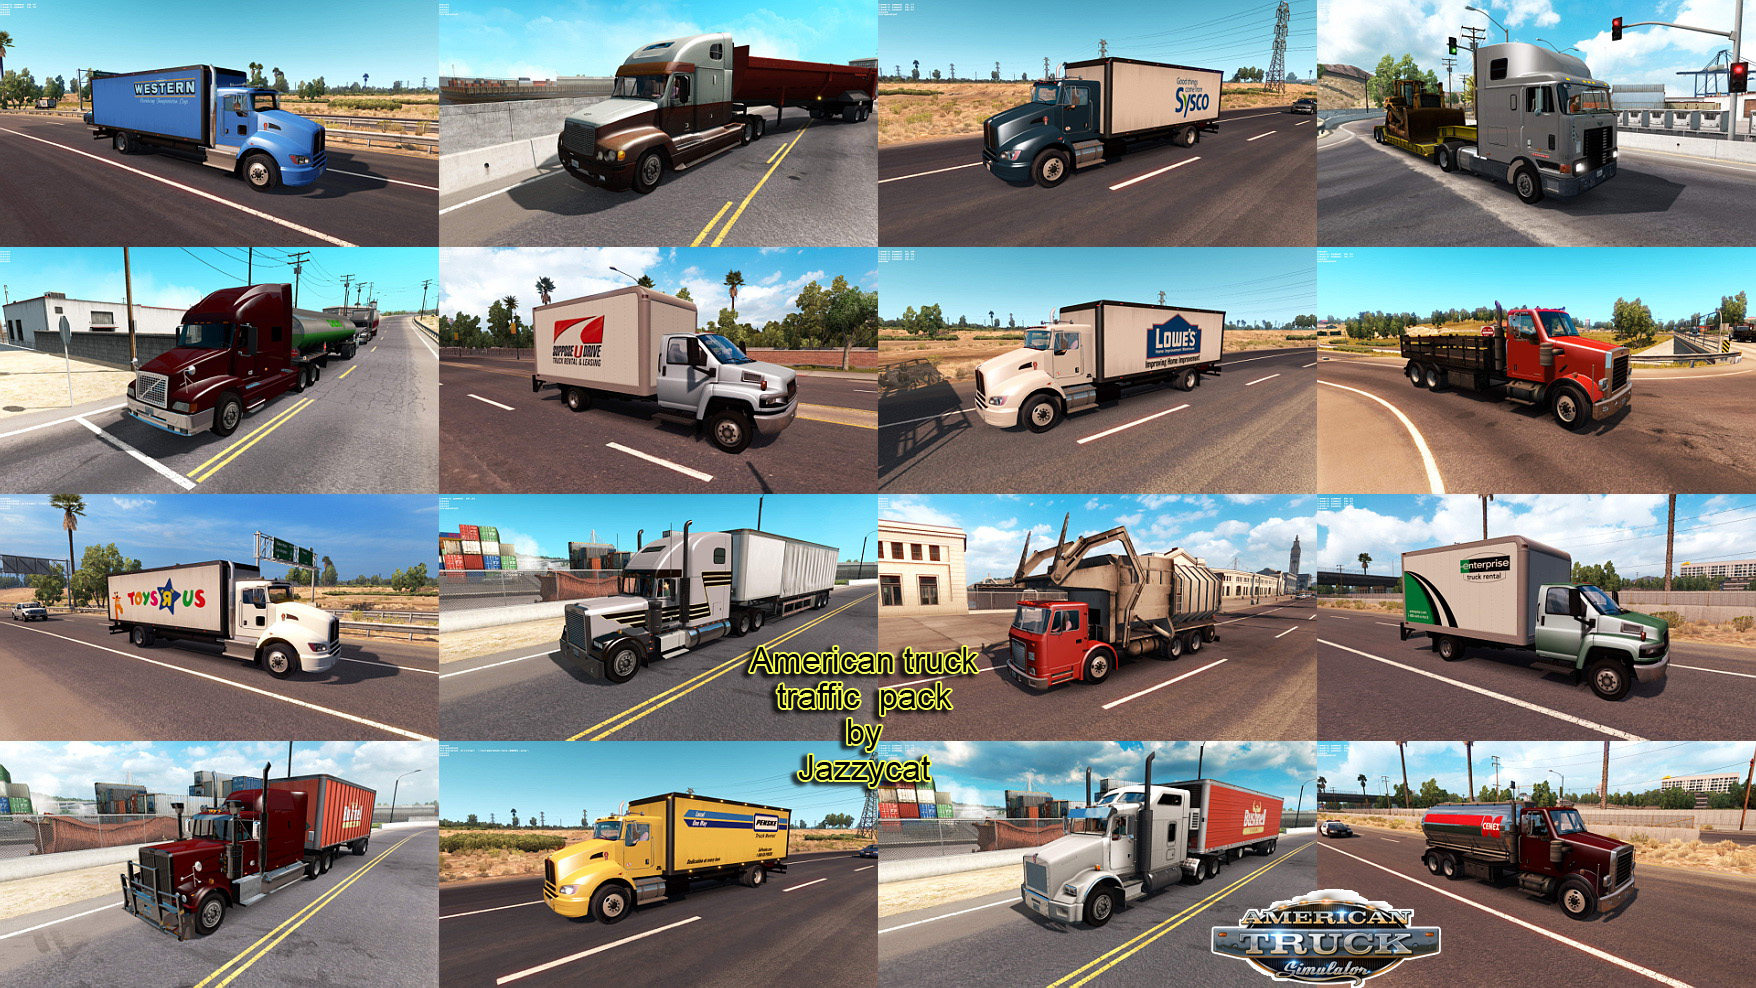 01_truck_traffic_pack_by_Jazzycat_v1.3.jpg